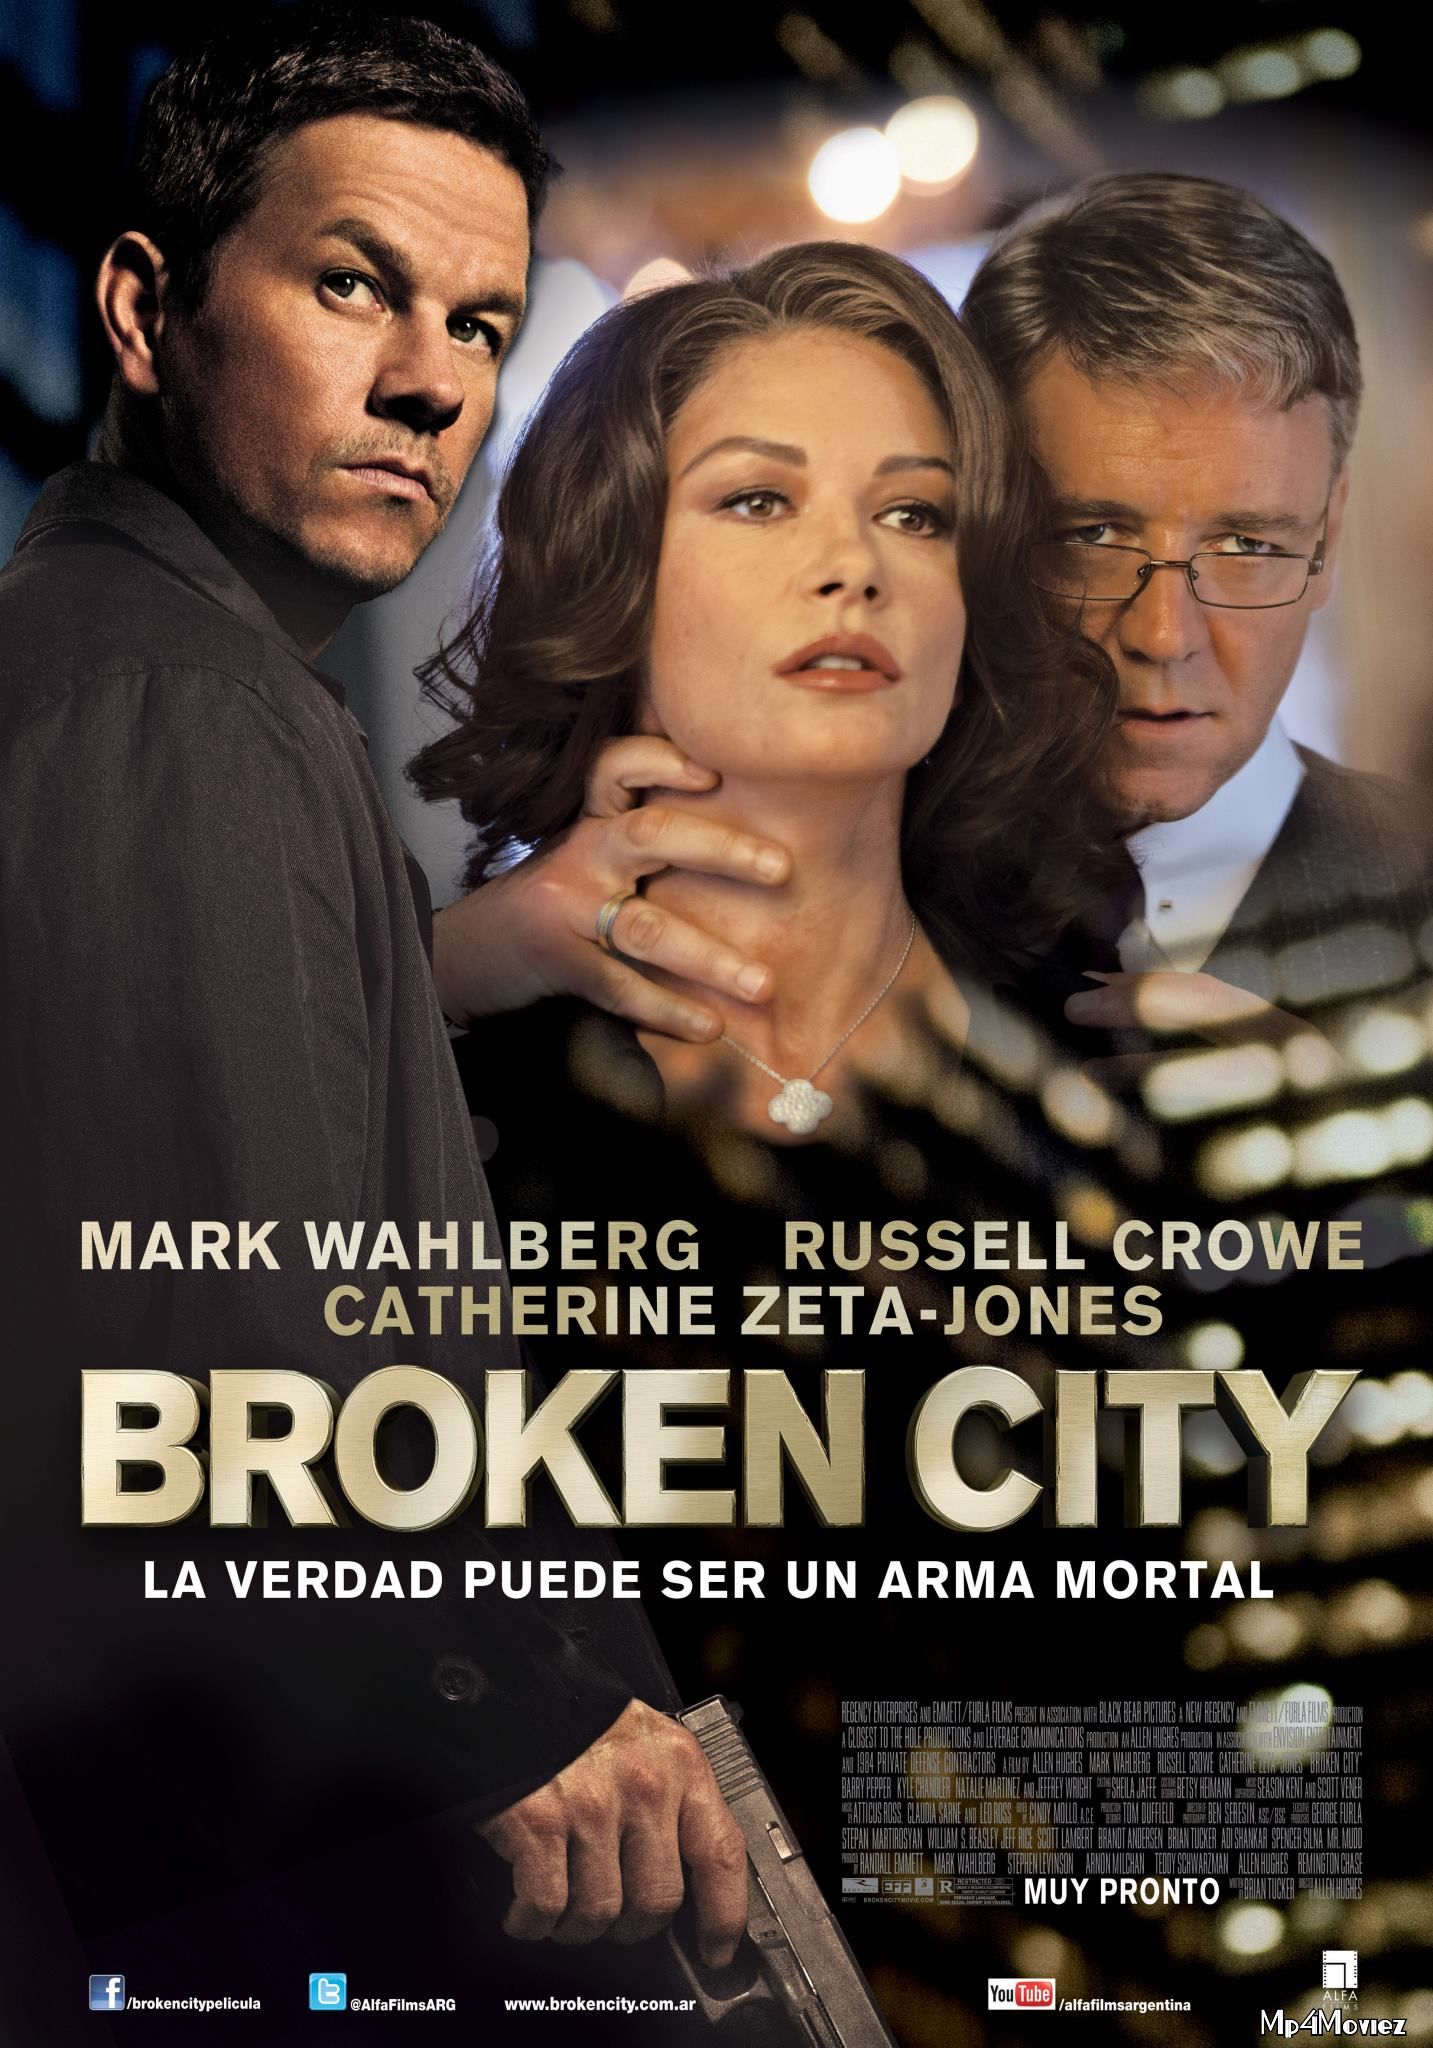 Broken City (2013) Hindi Dubbed BluRay download full movie